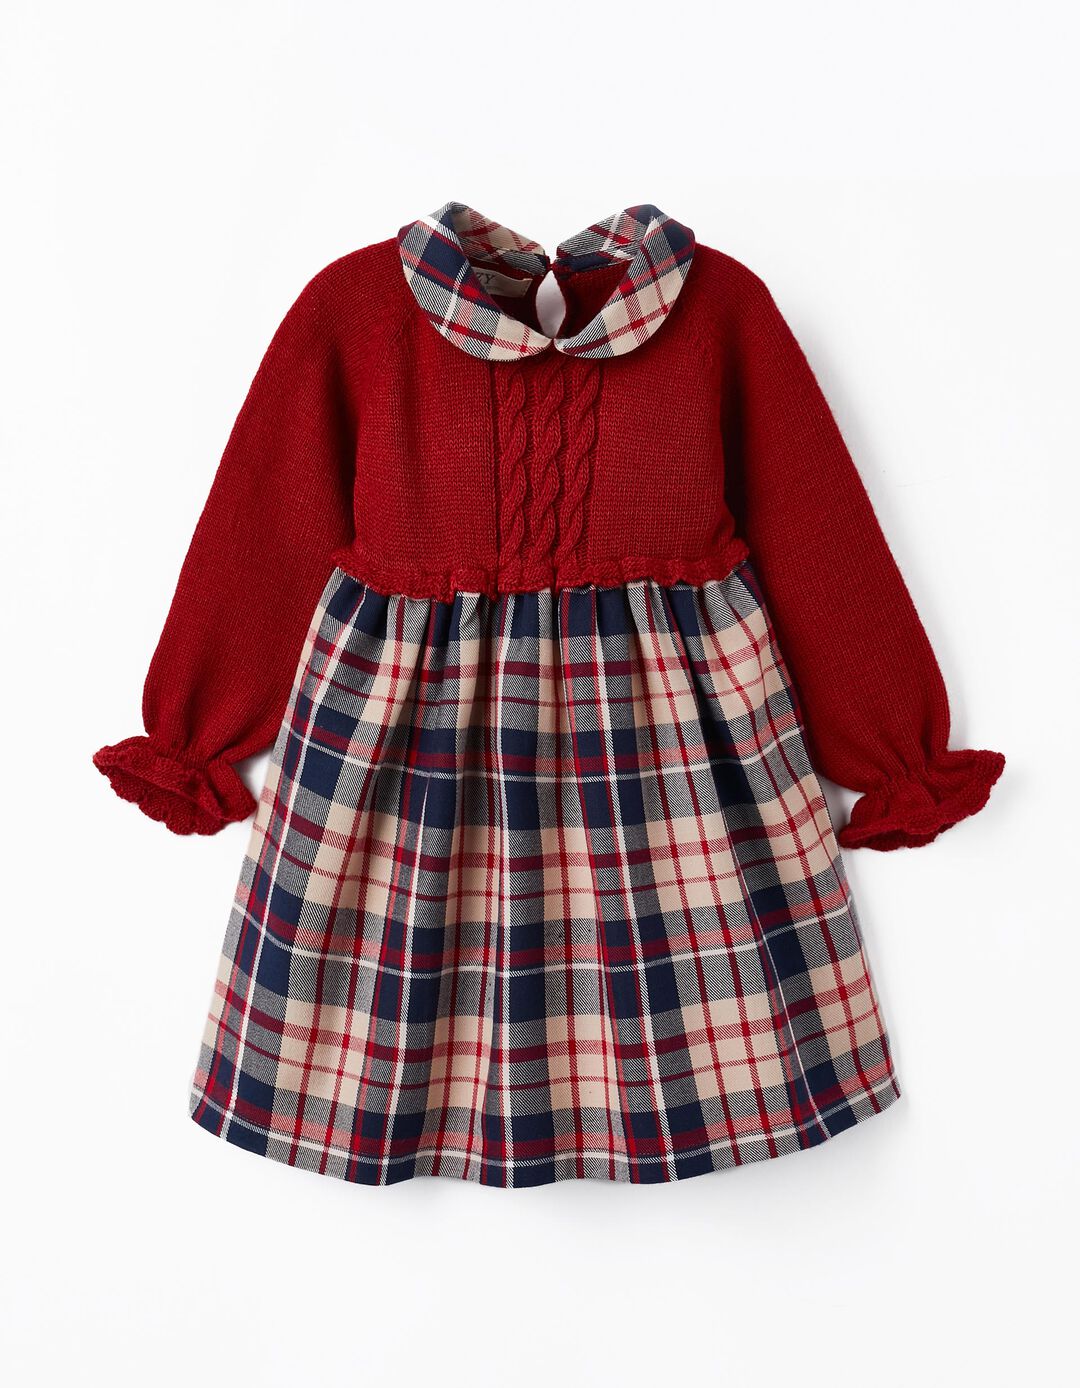 Combined Dress for Baby Girls 'B&S', Red/Beige/Dark Blue